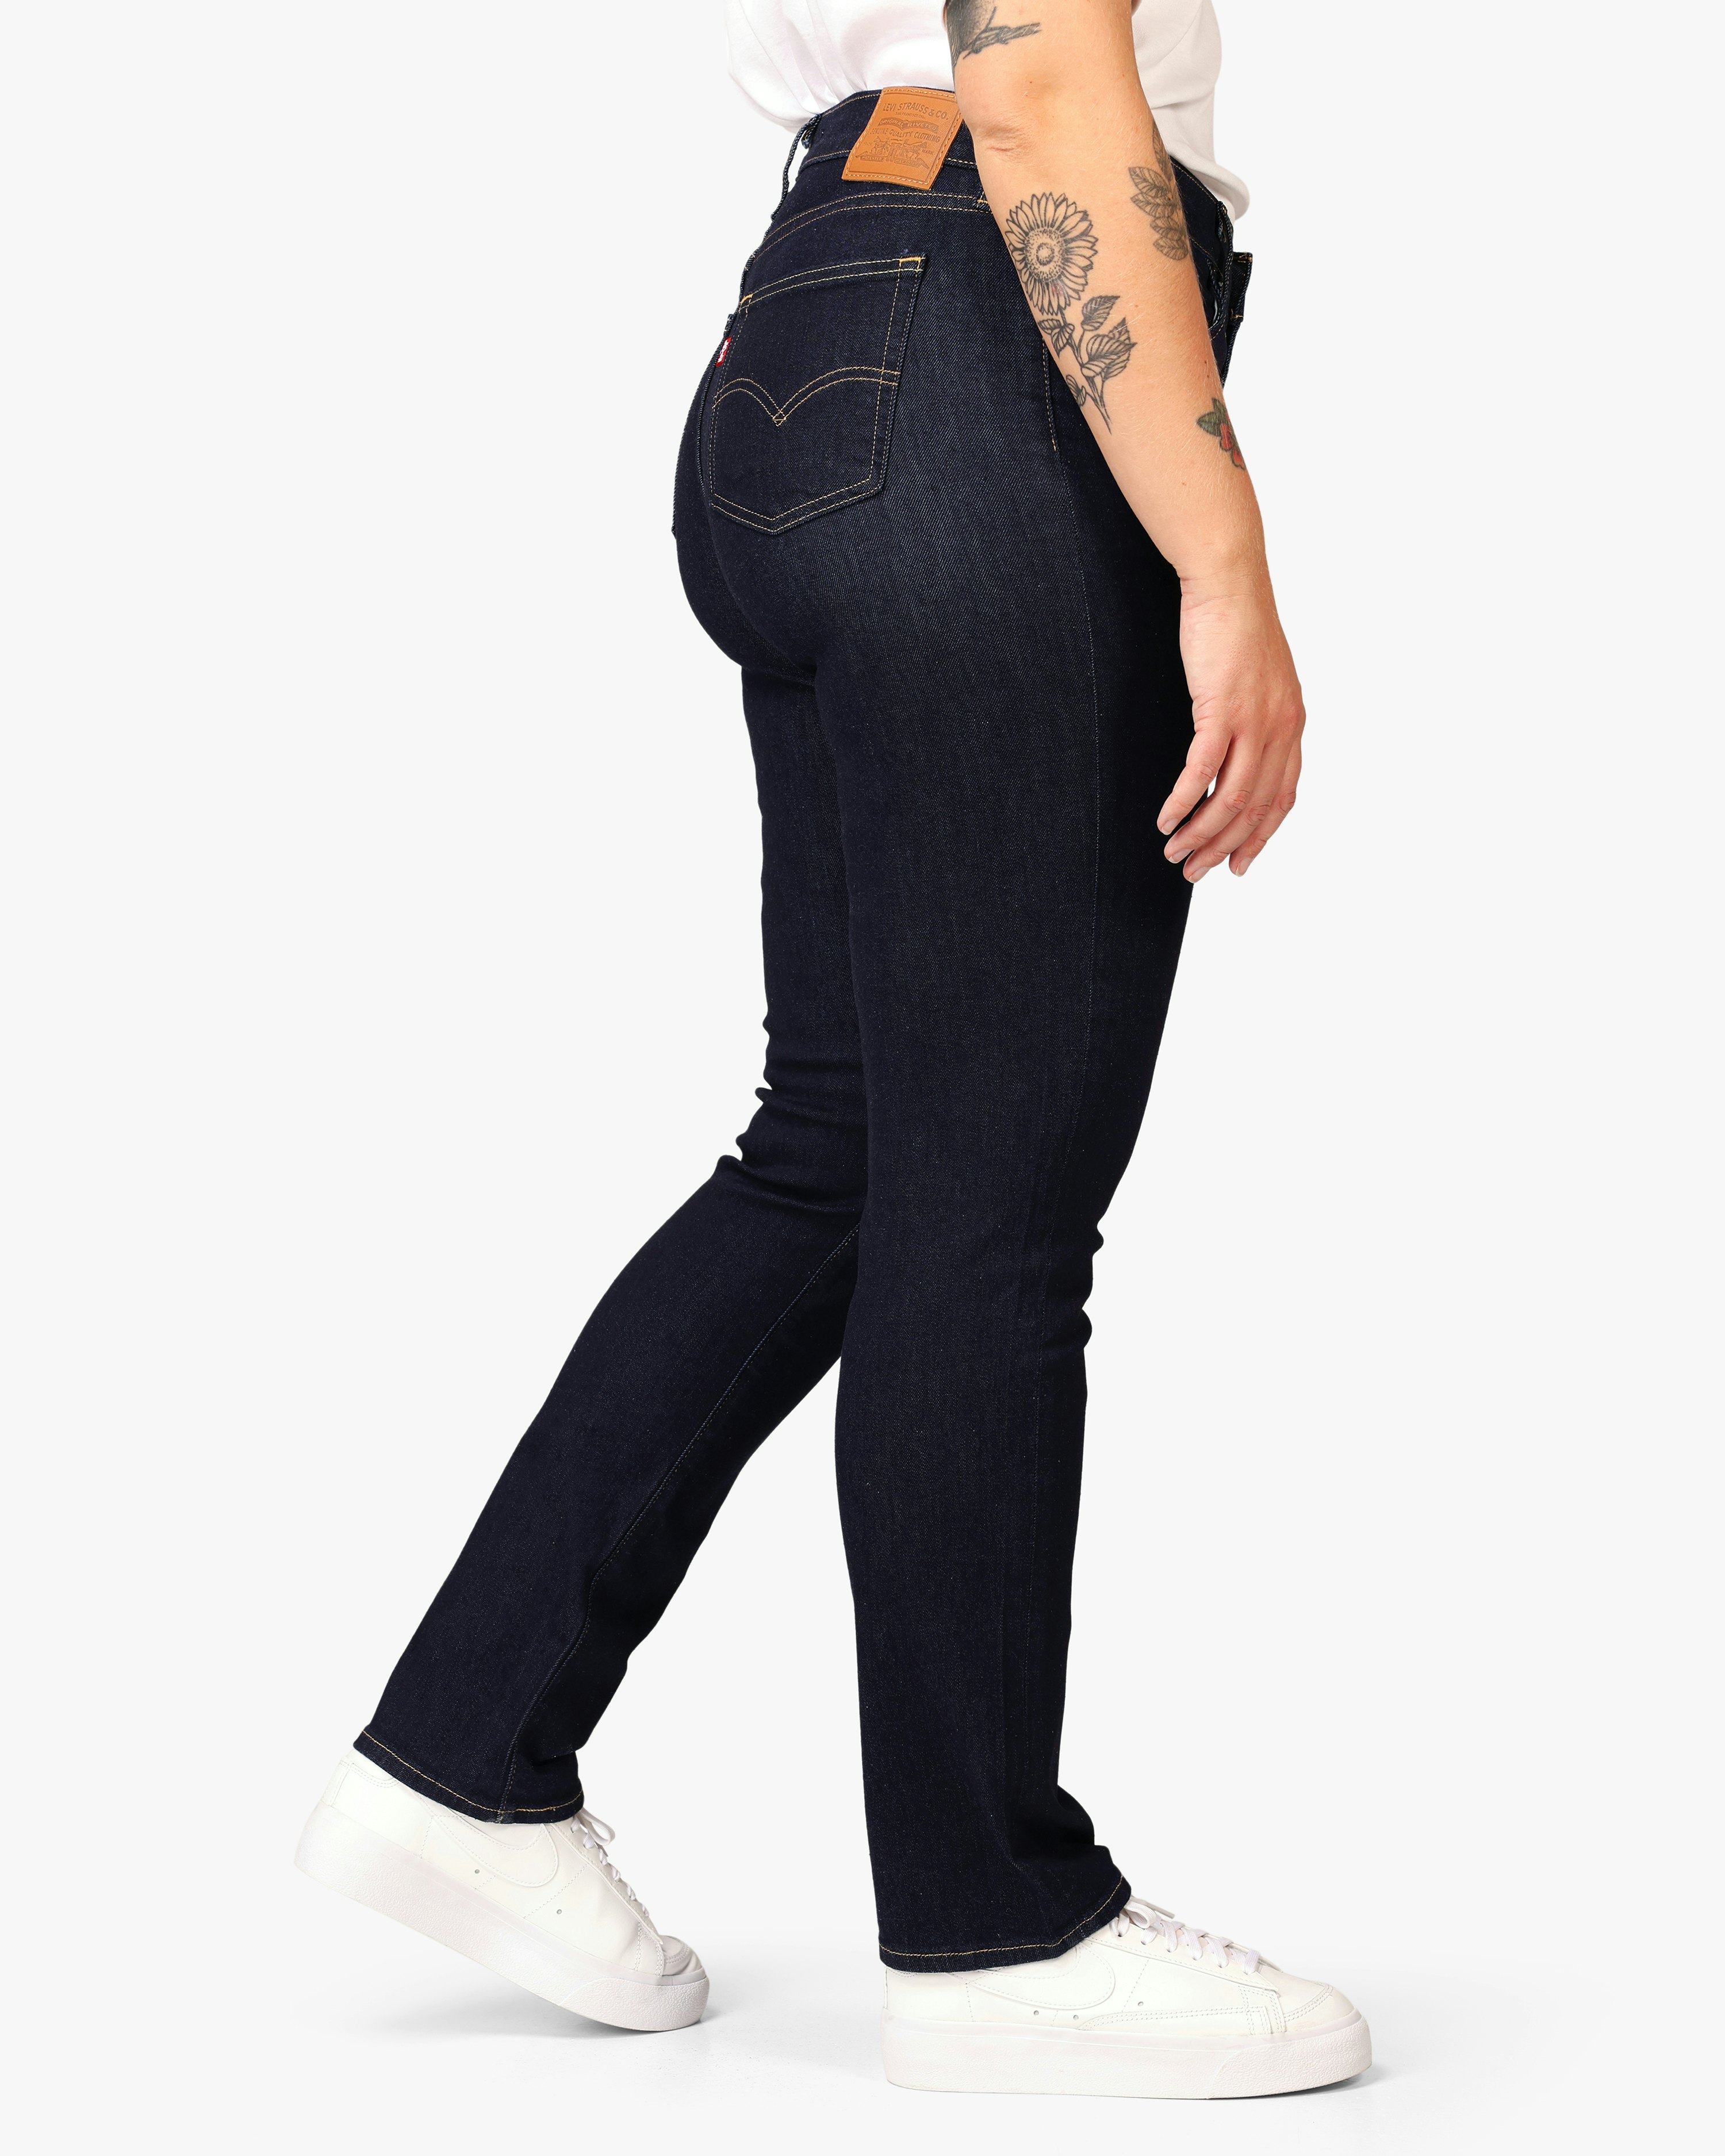 honning vinge Svare Levi's 724™ High Rise Straight Dark Blue Jeans | Women | at Carlings.com